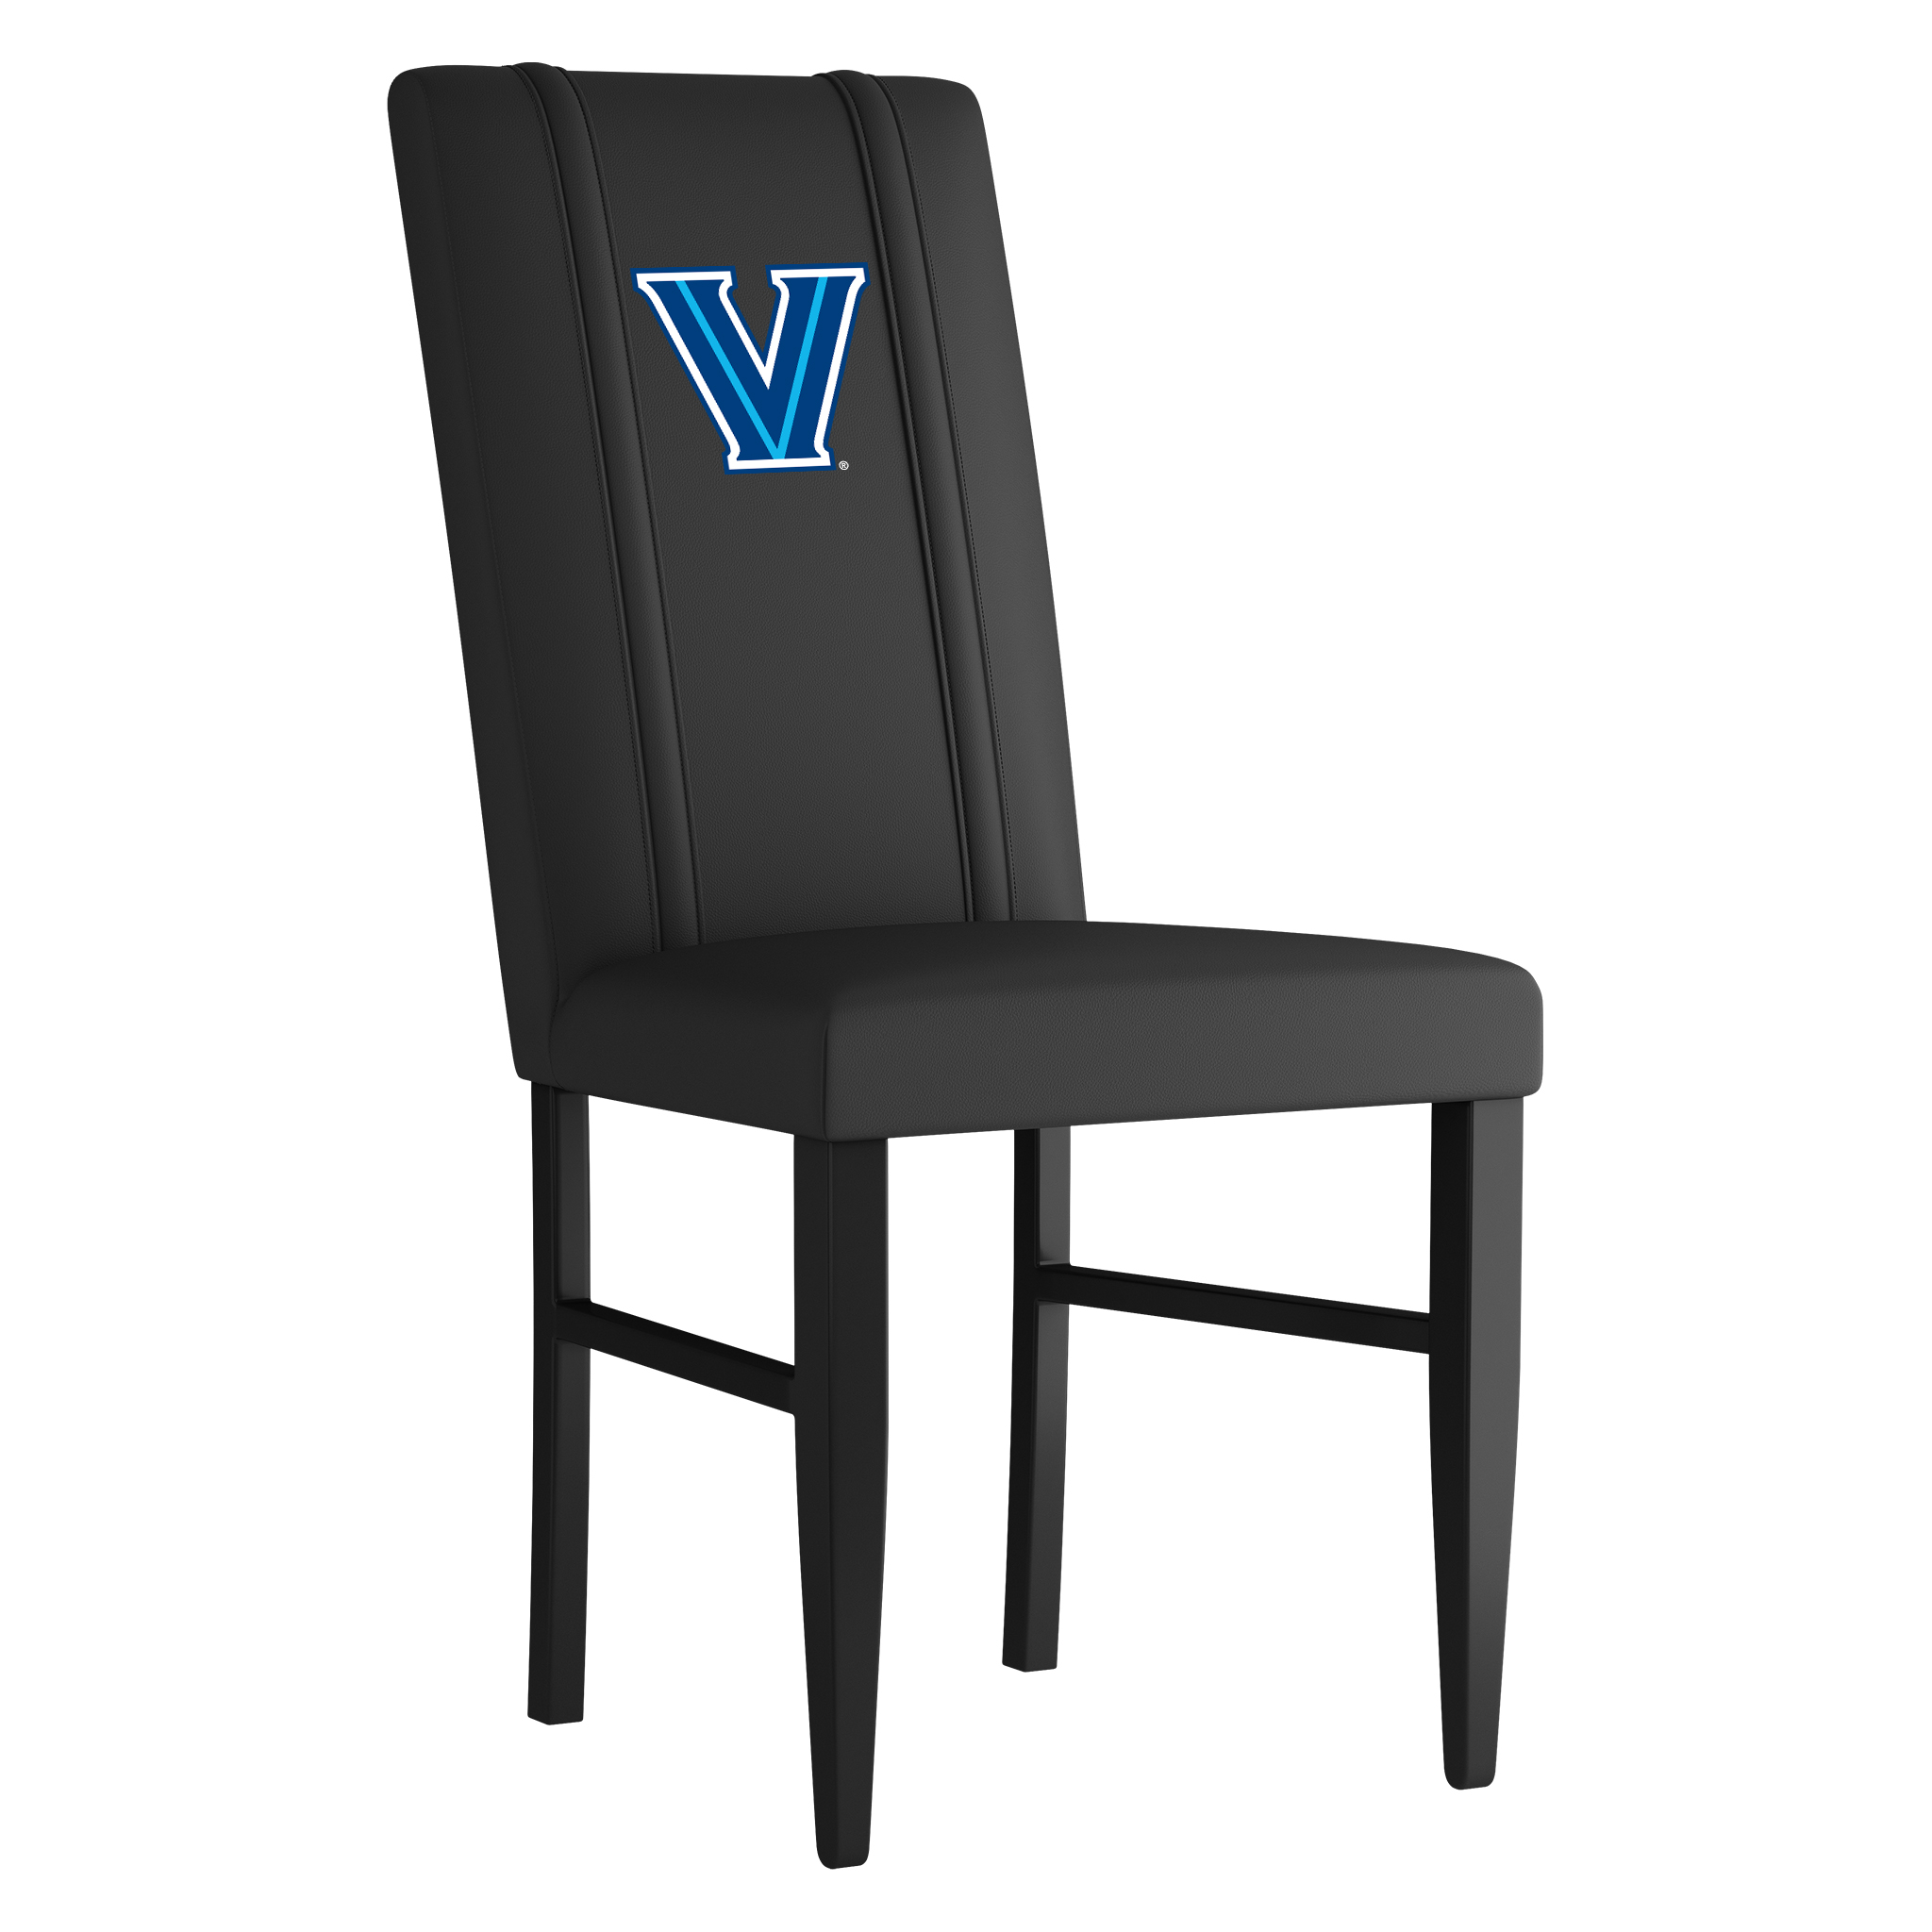 Villanova Side Chair 2000 With Villanova Wildcats Logo